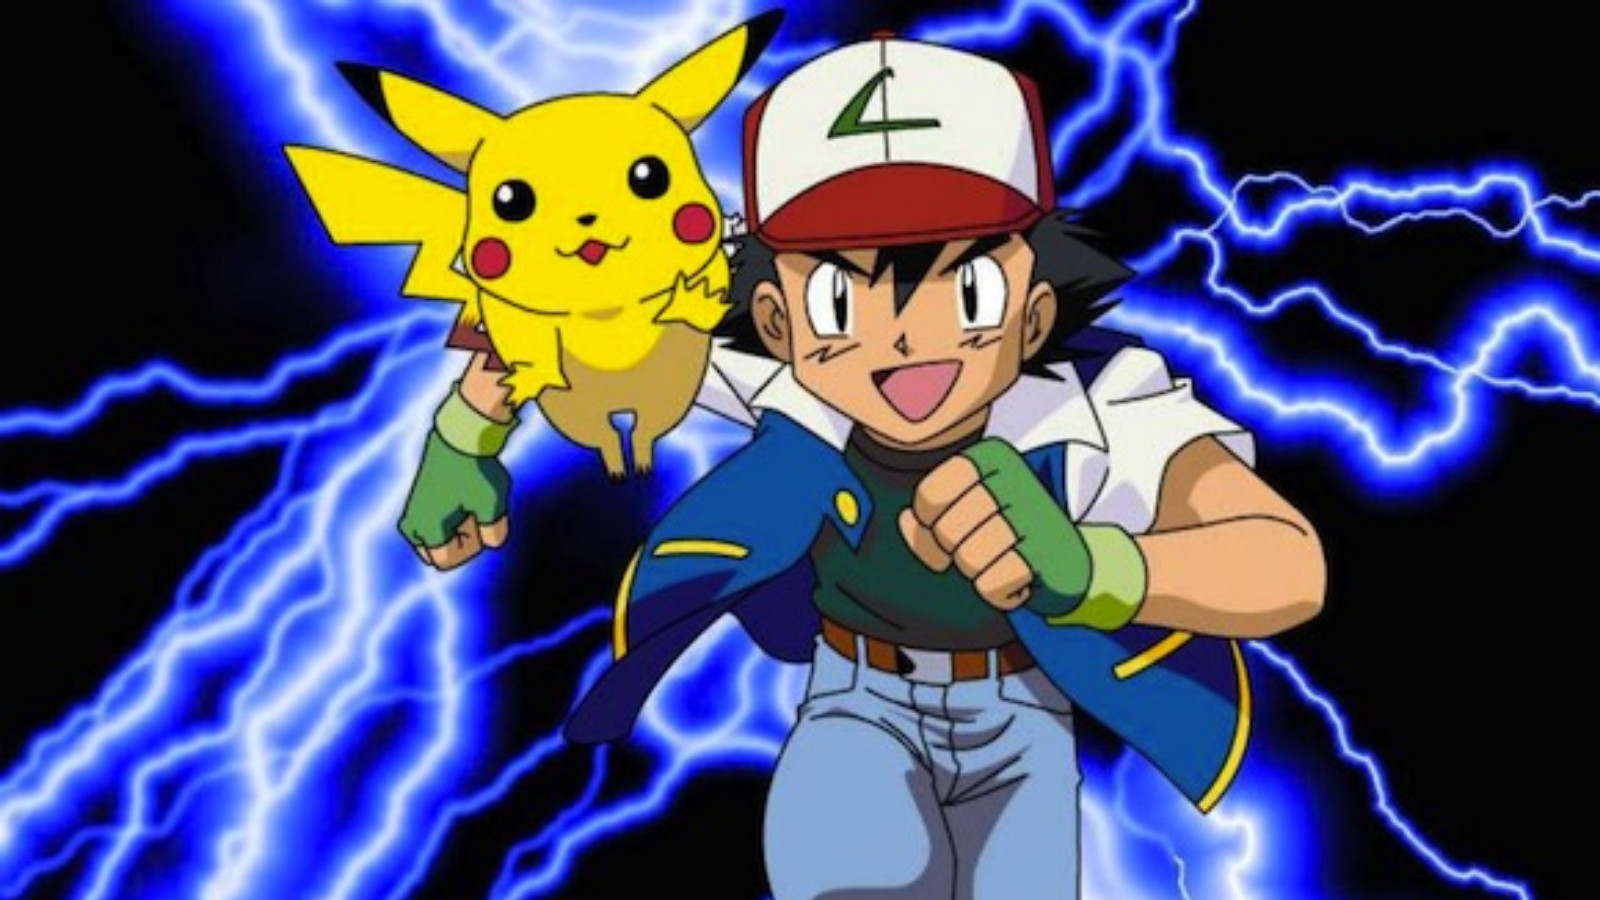 Ash Ketchum Becomes a Pokémon Master After More Than 1,000 Episodes